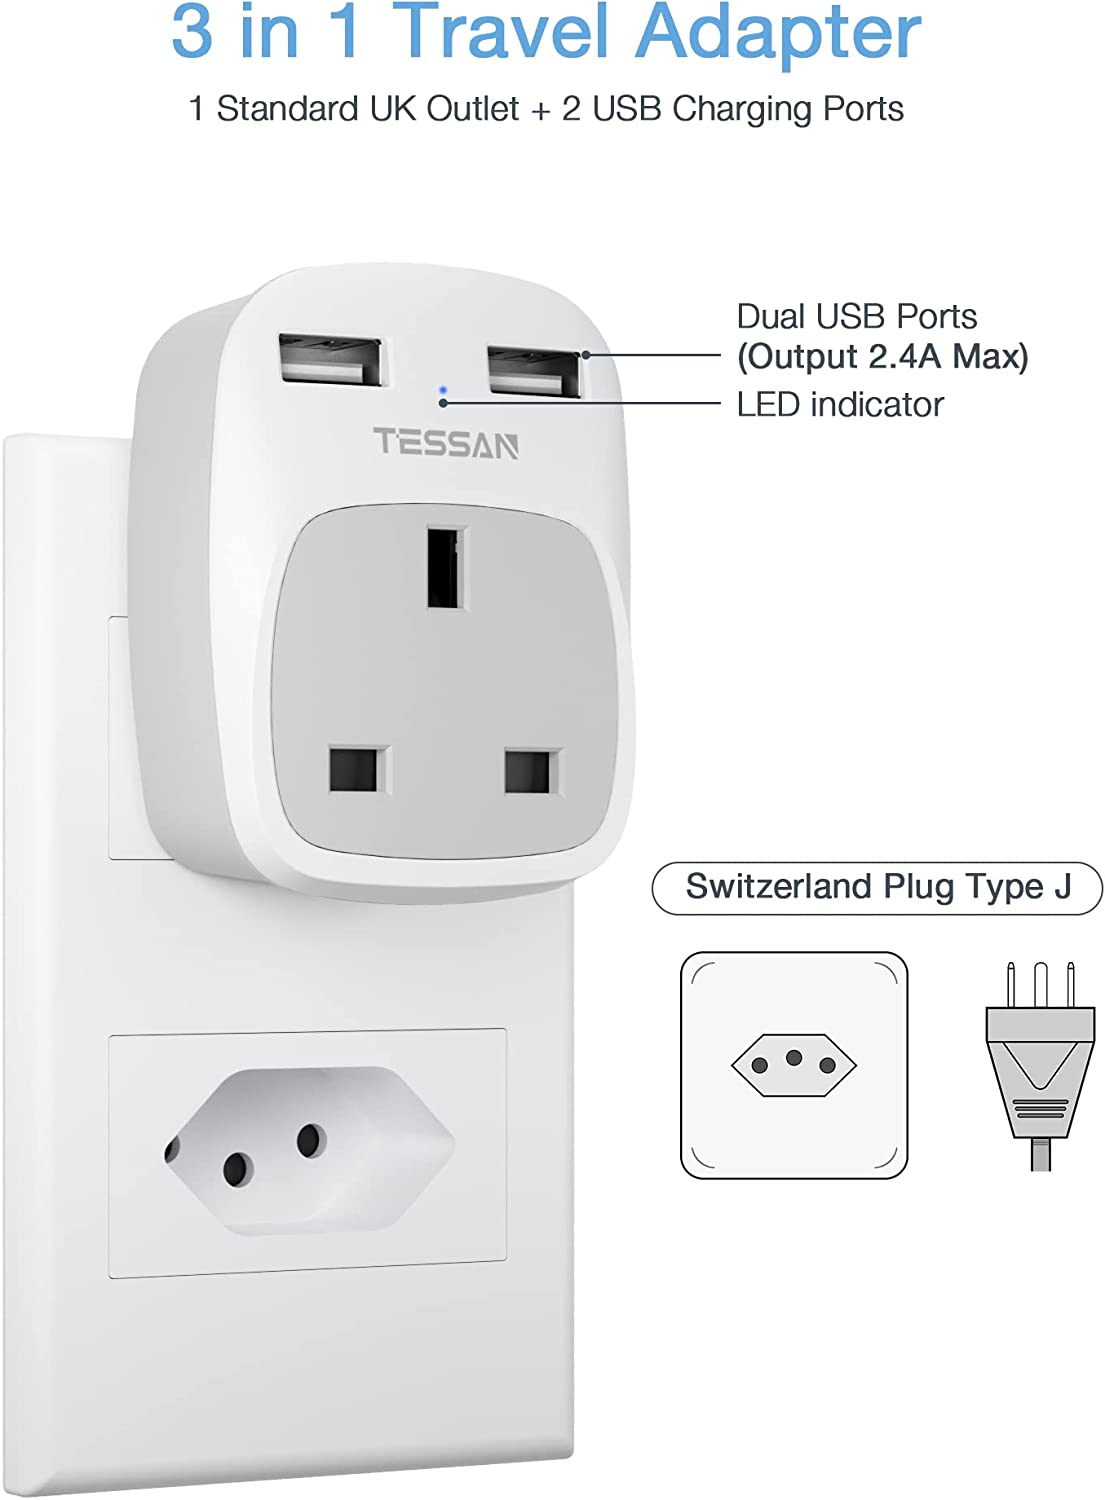 UK to Switzerland Plug Adapter with 2 USB